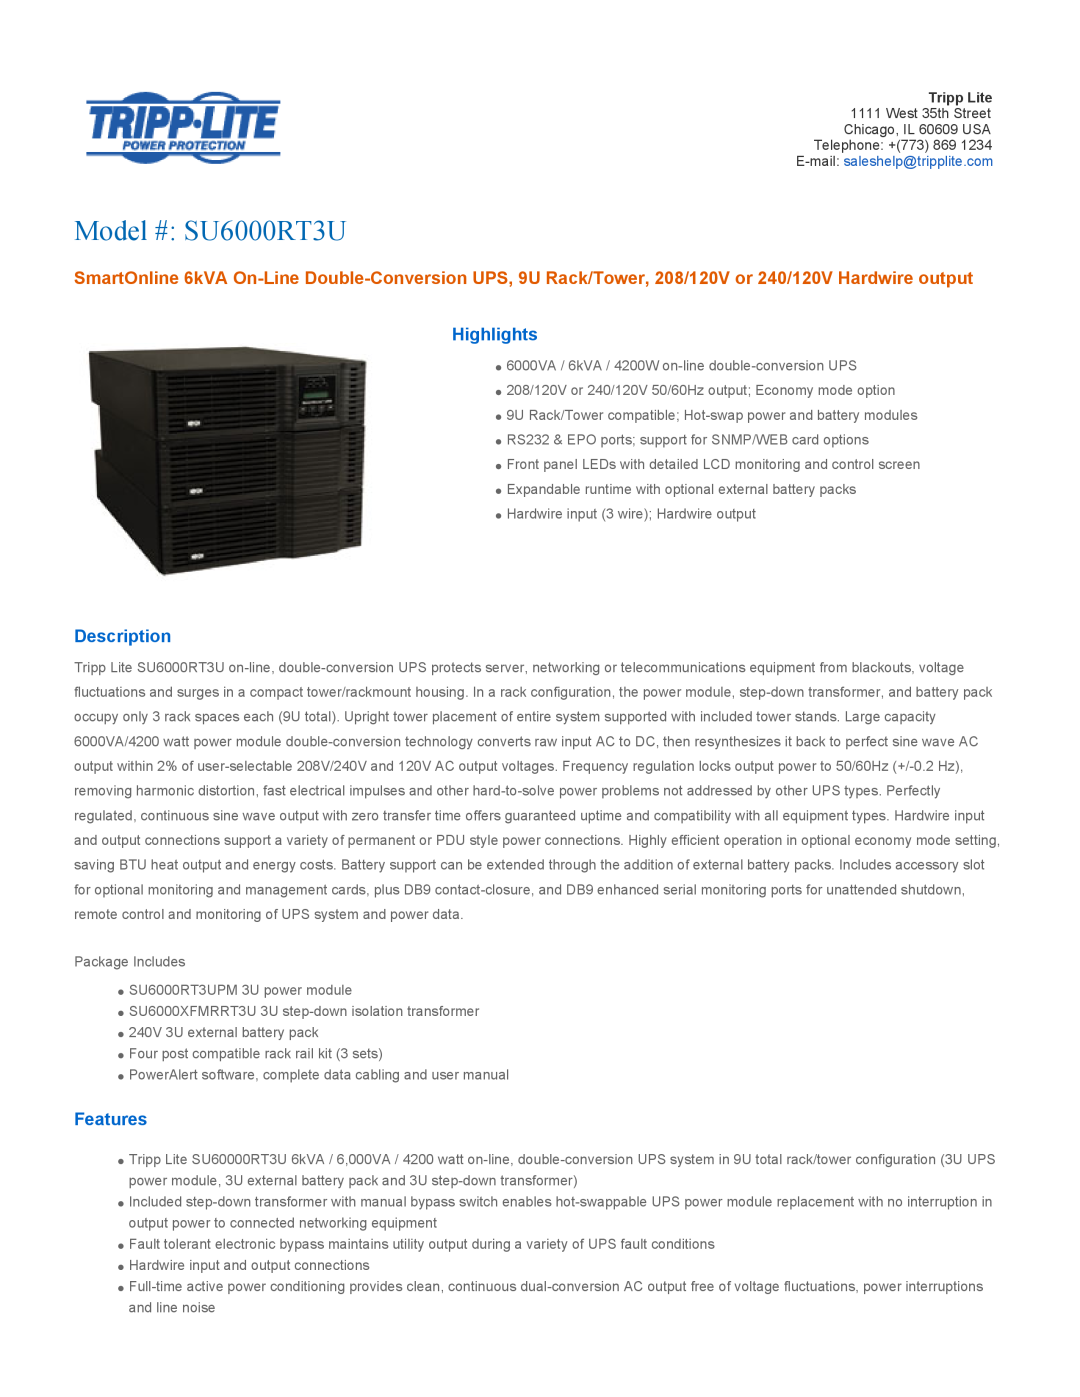 Tripp Lite user manual Highlights, Description, Features, Model # SU6000RT3U 